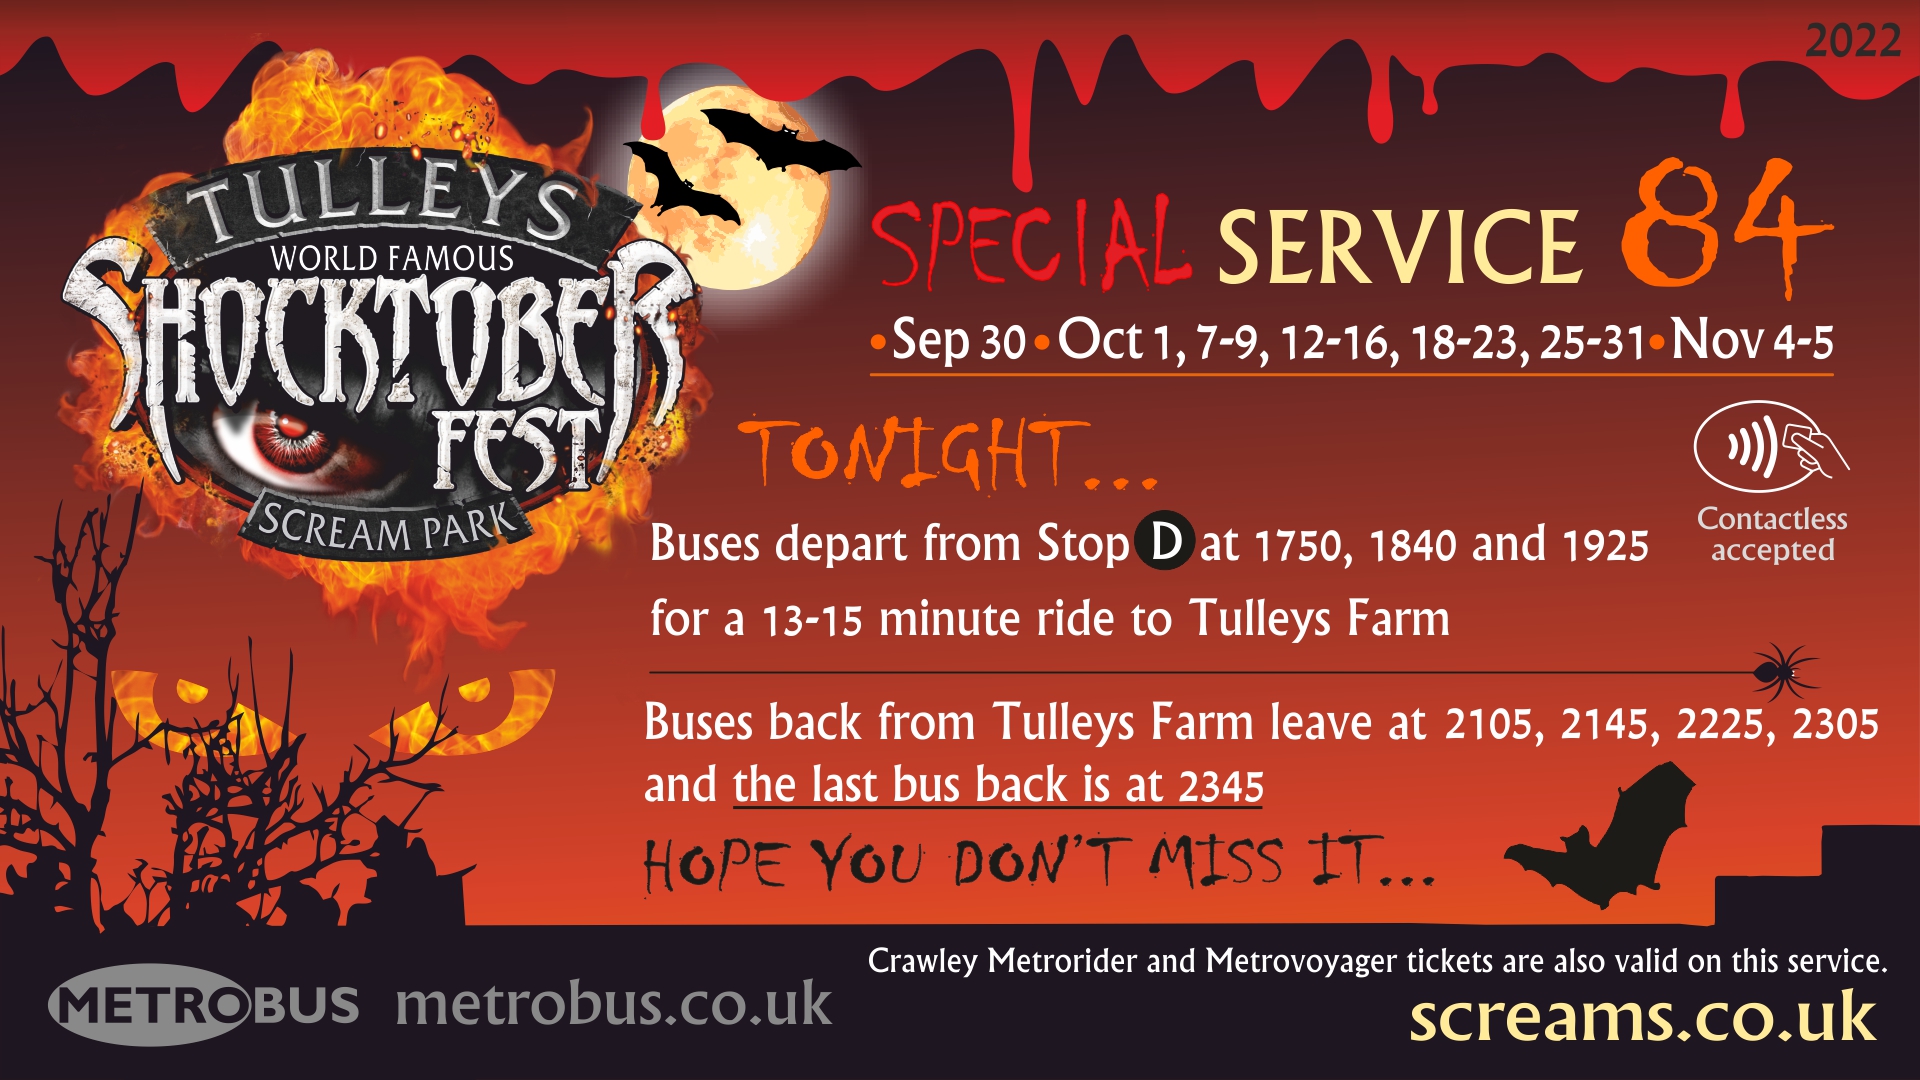 Tulleys Shocktober Fest Metrobus